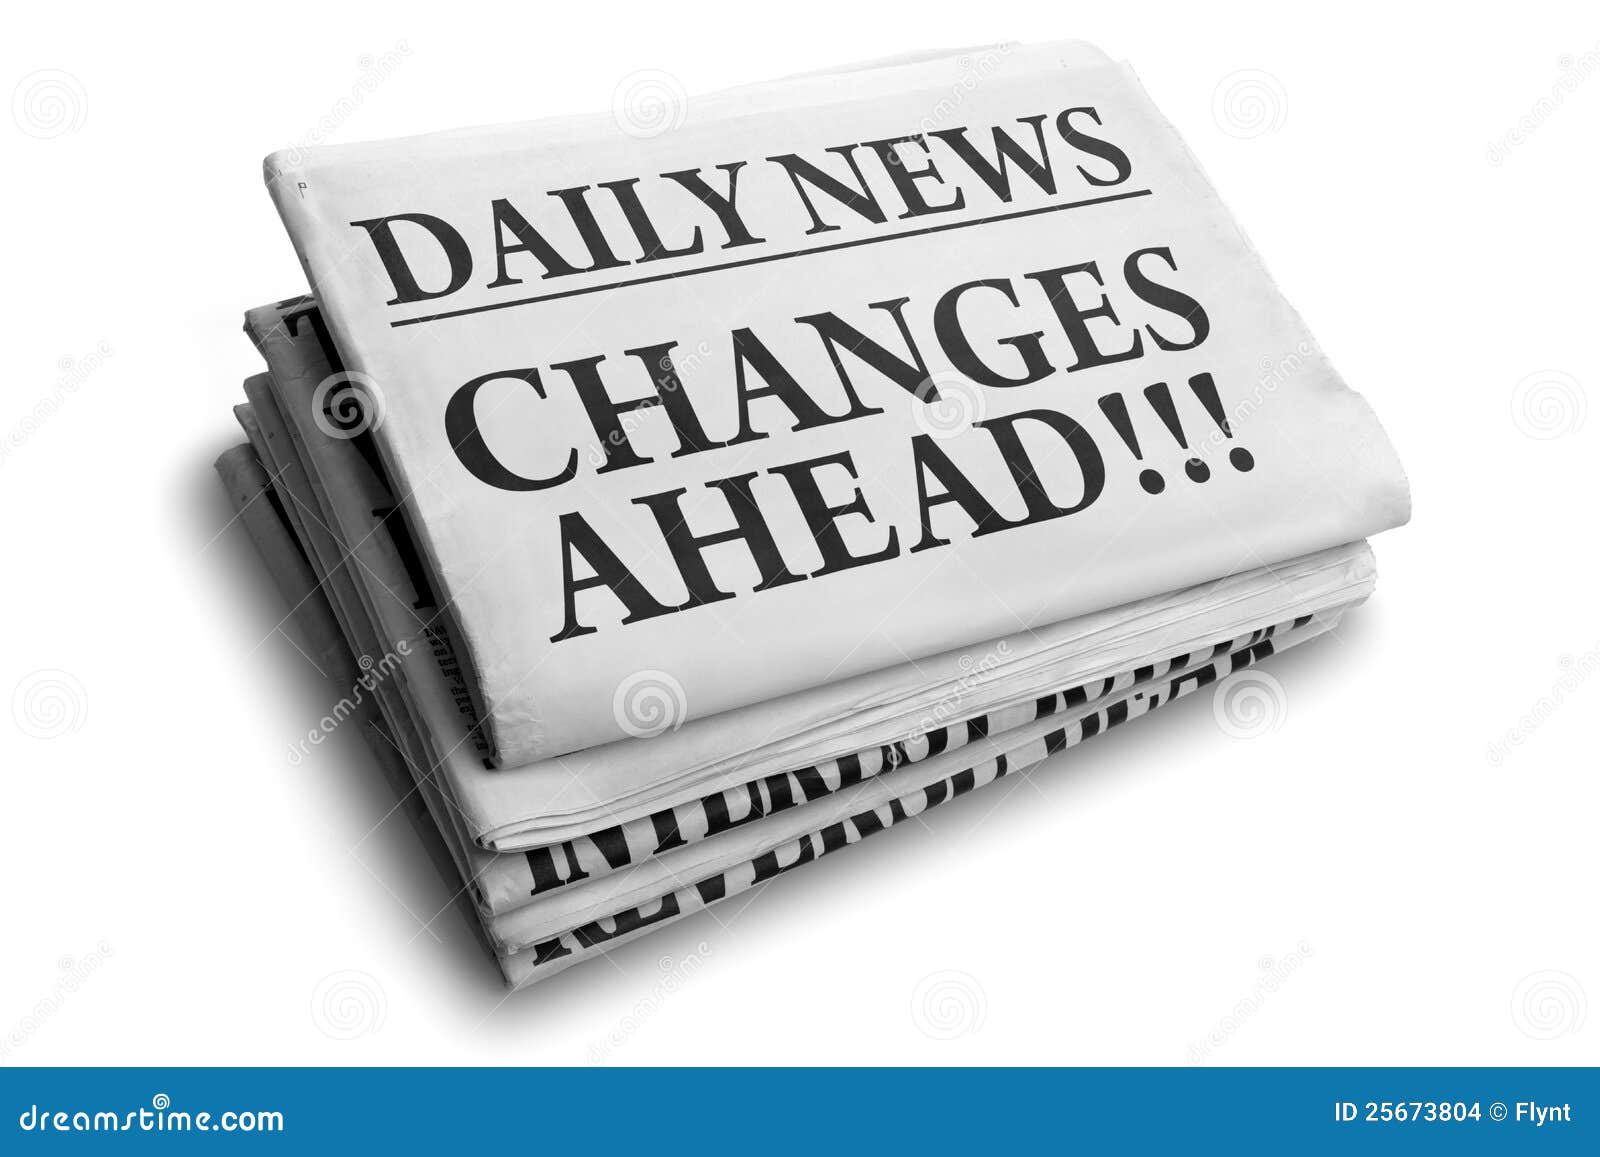 changes ahead daily newspaper headline